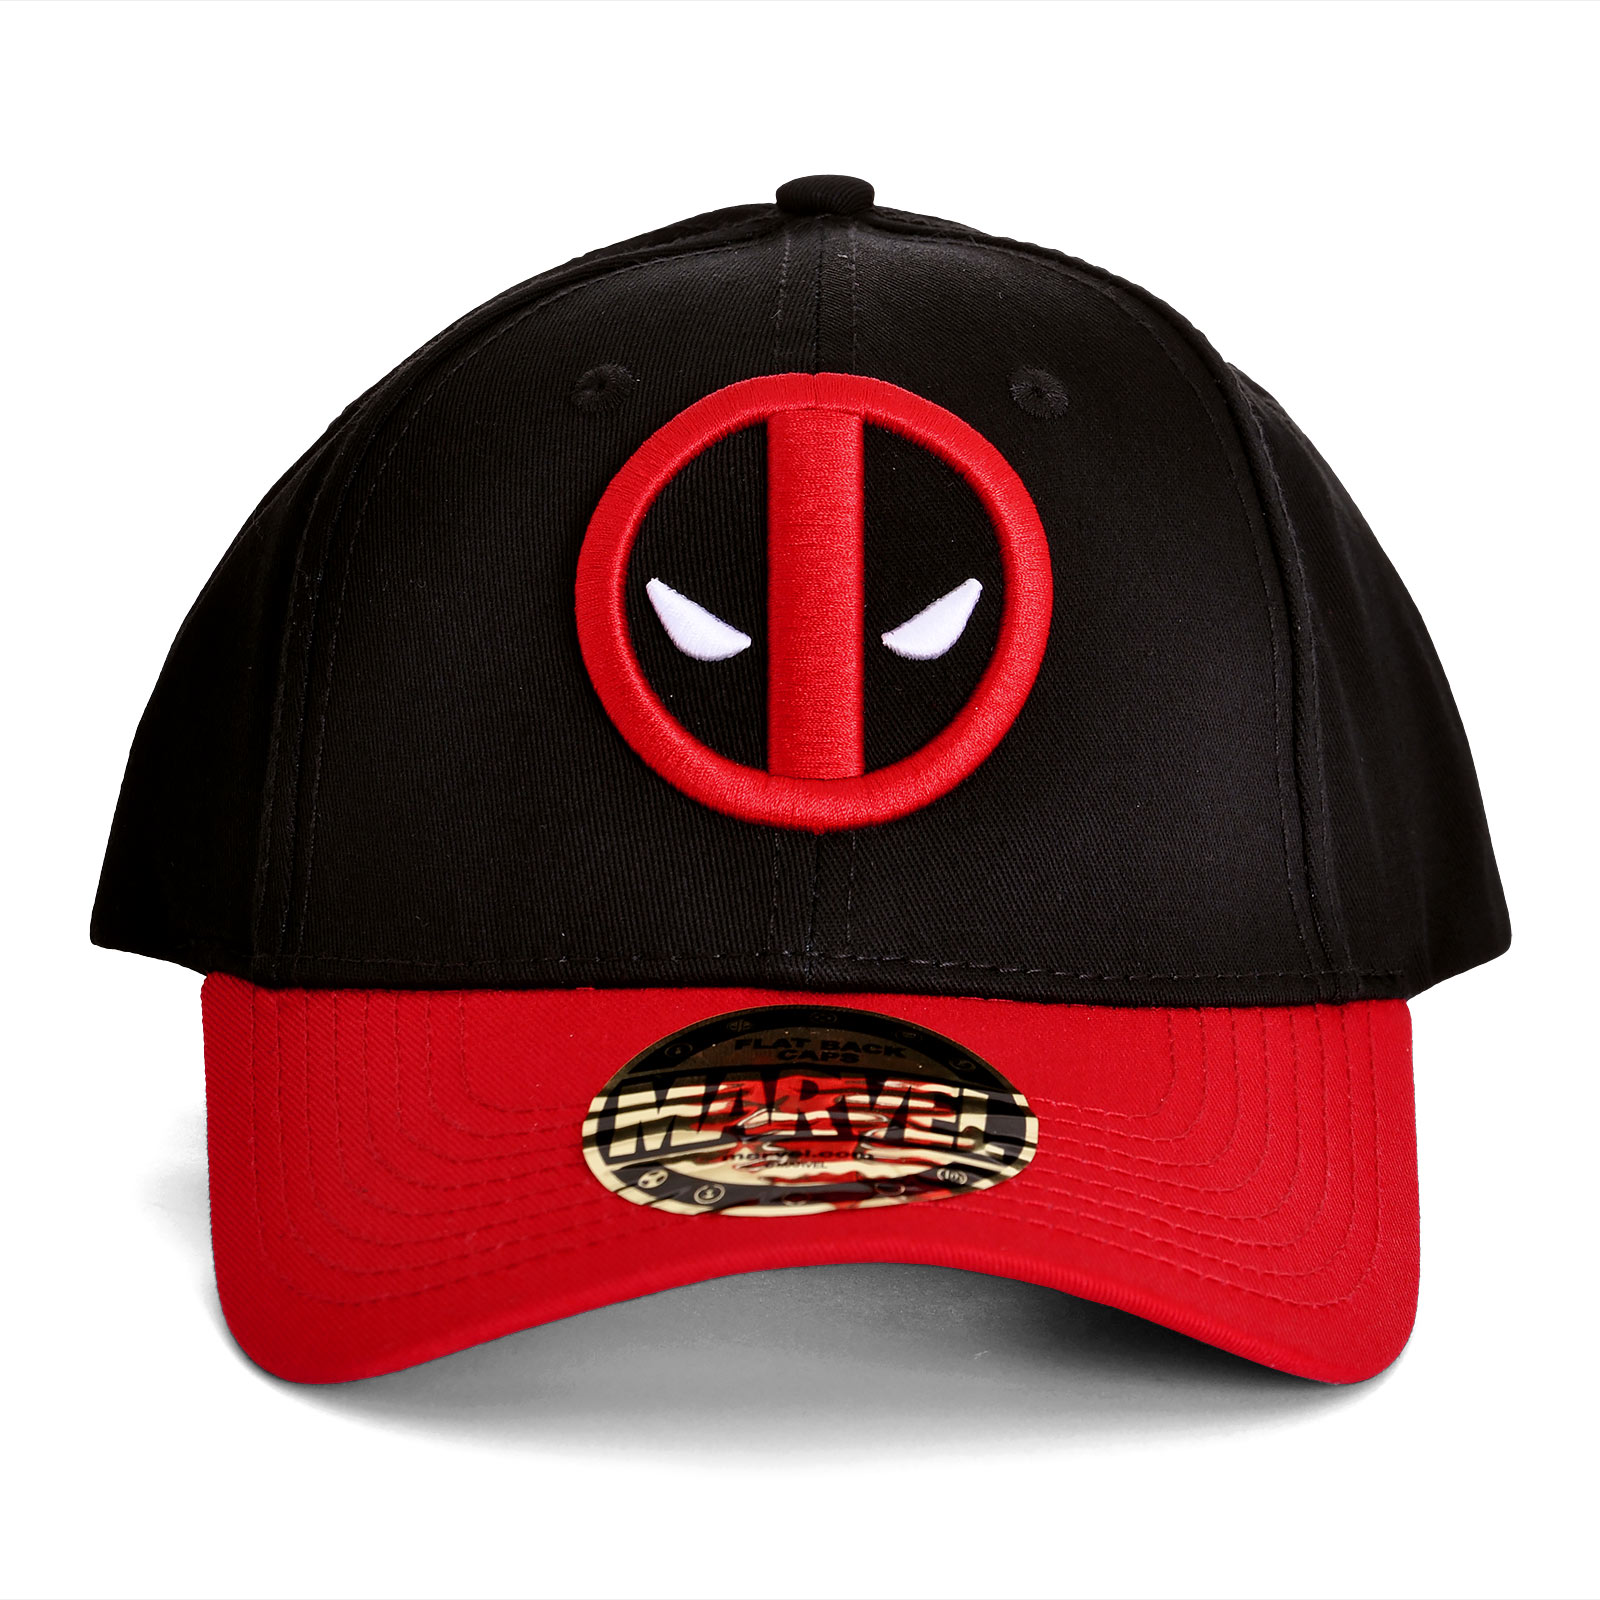 Deadpool - Logo Baseball Cap